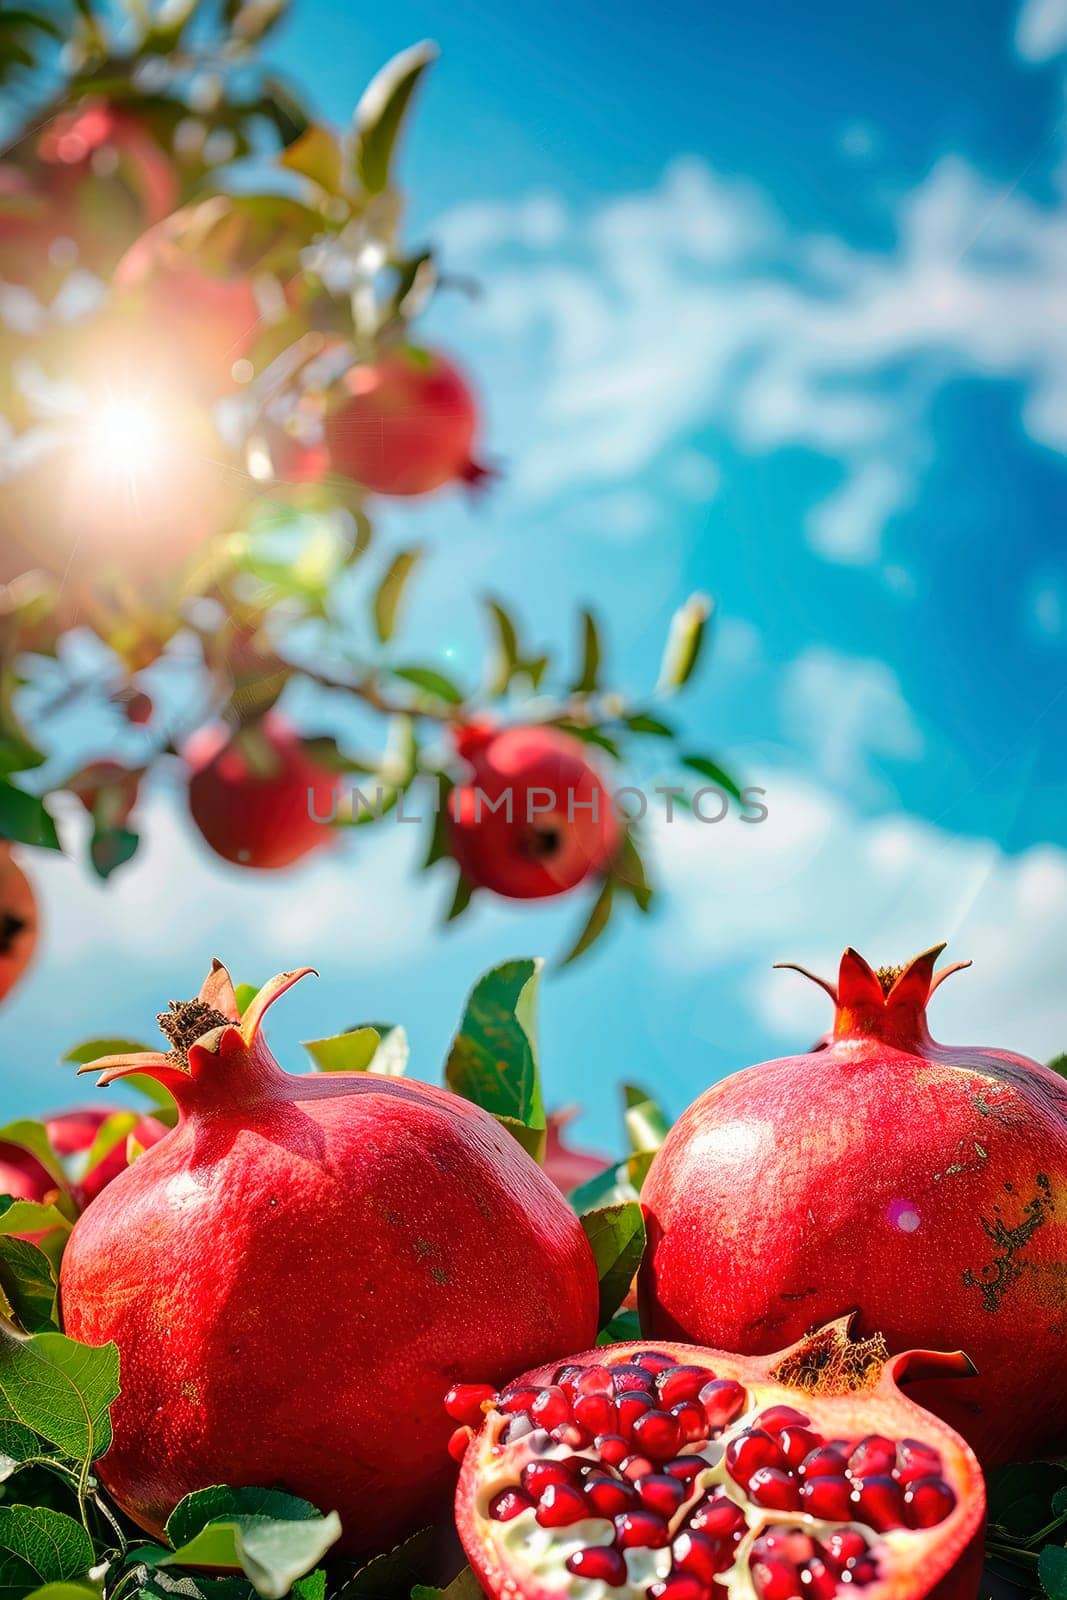 Pomegranate harvest in the garden. selective focus. by yanadjana